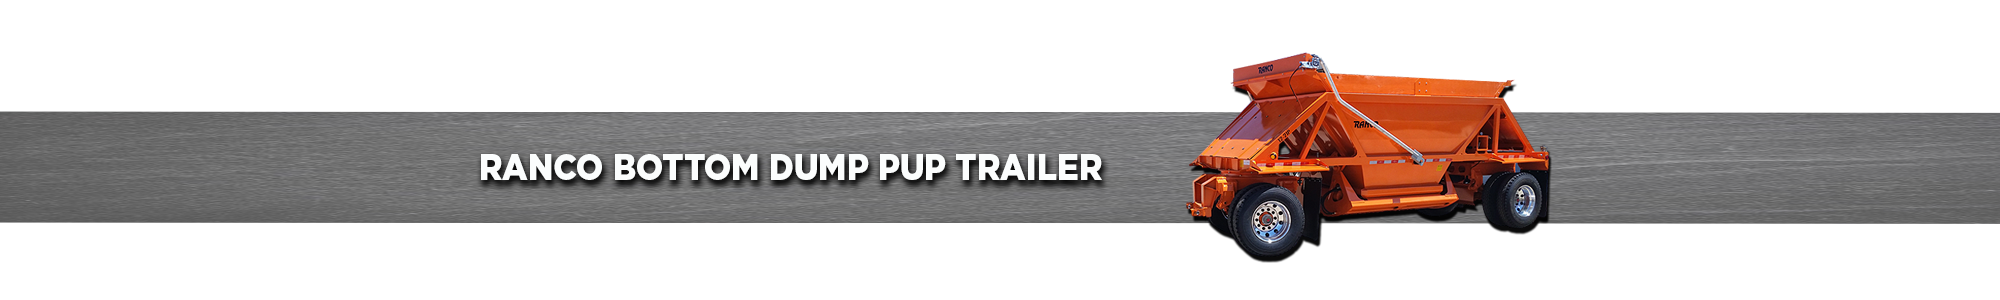 RANCO Bottom Dump Pup Trailer